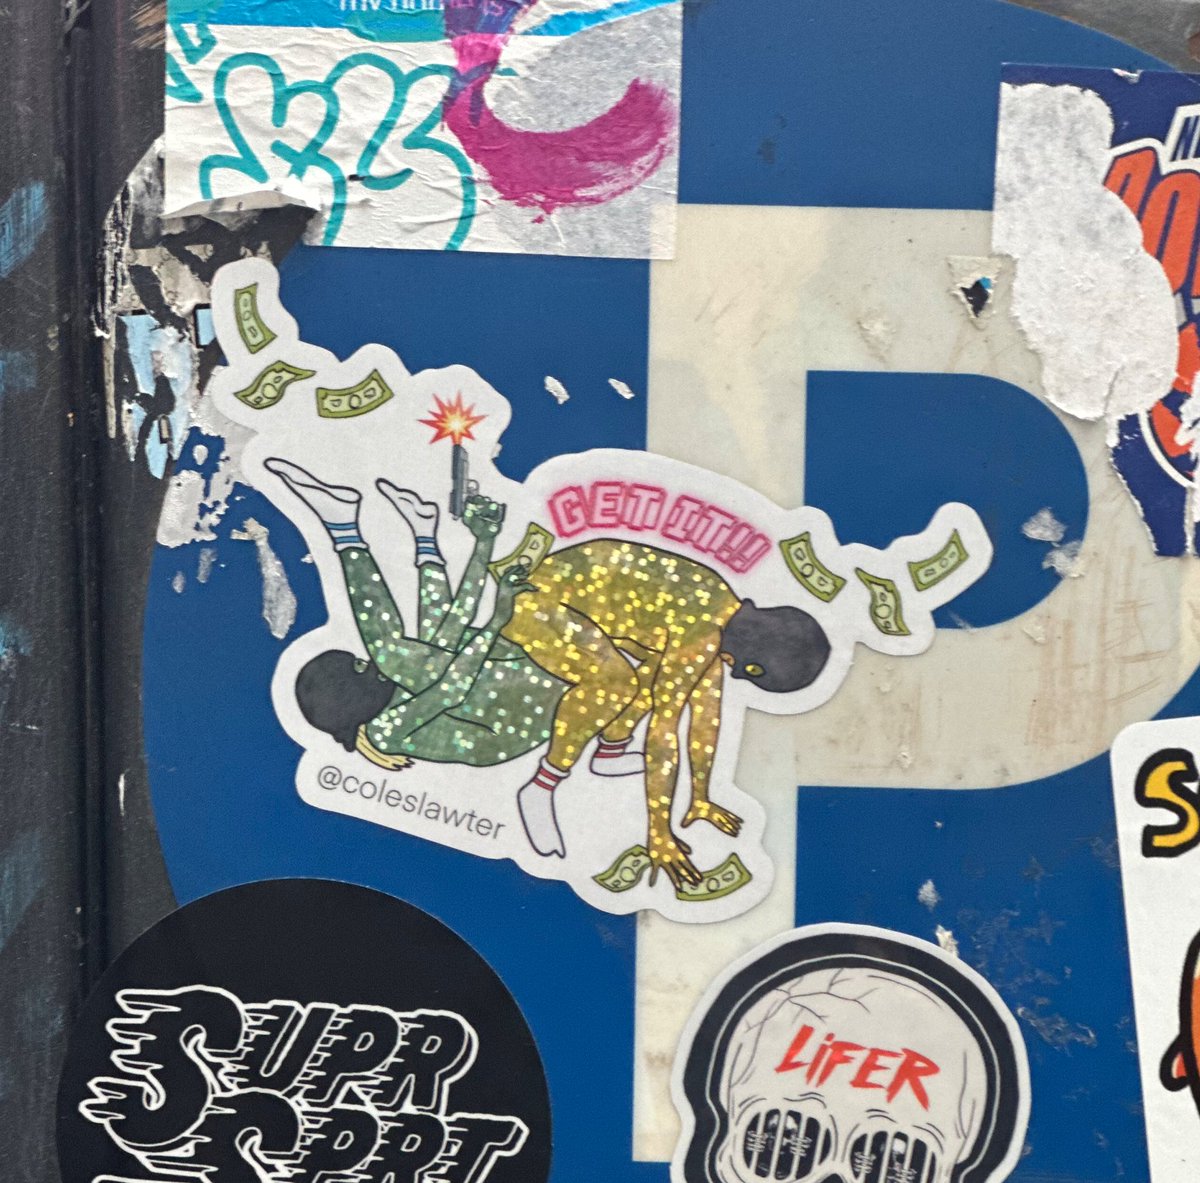 Get it!! 💯💸🙌
#Stickers #StreetArt #NYCart #ArtistOnTwitter